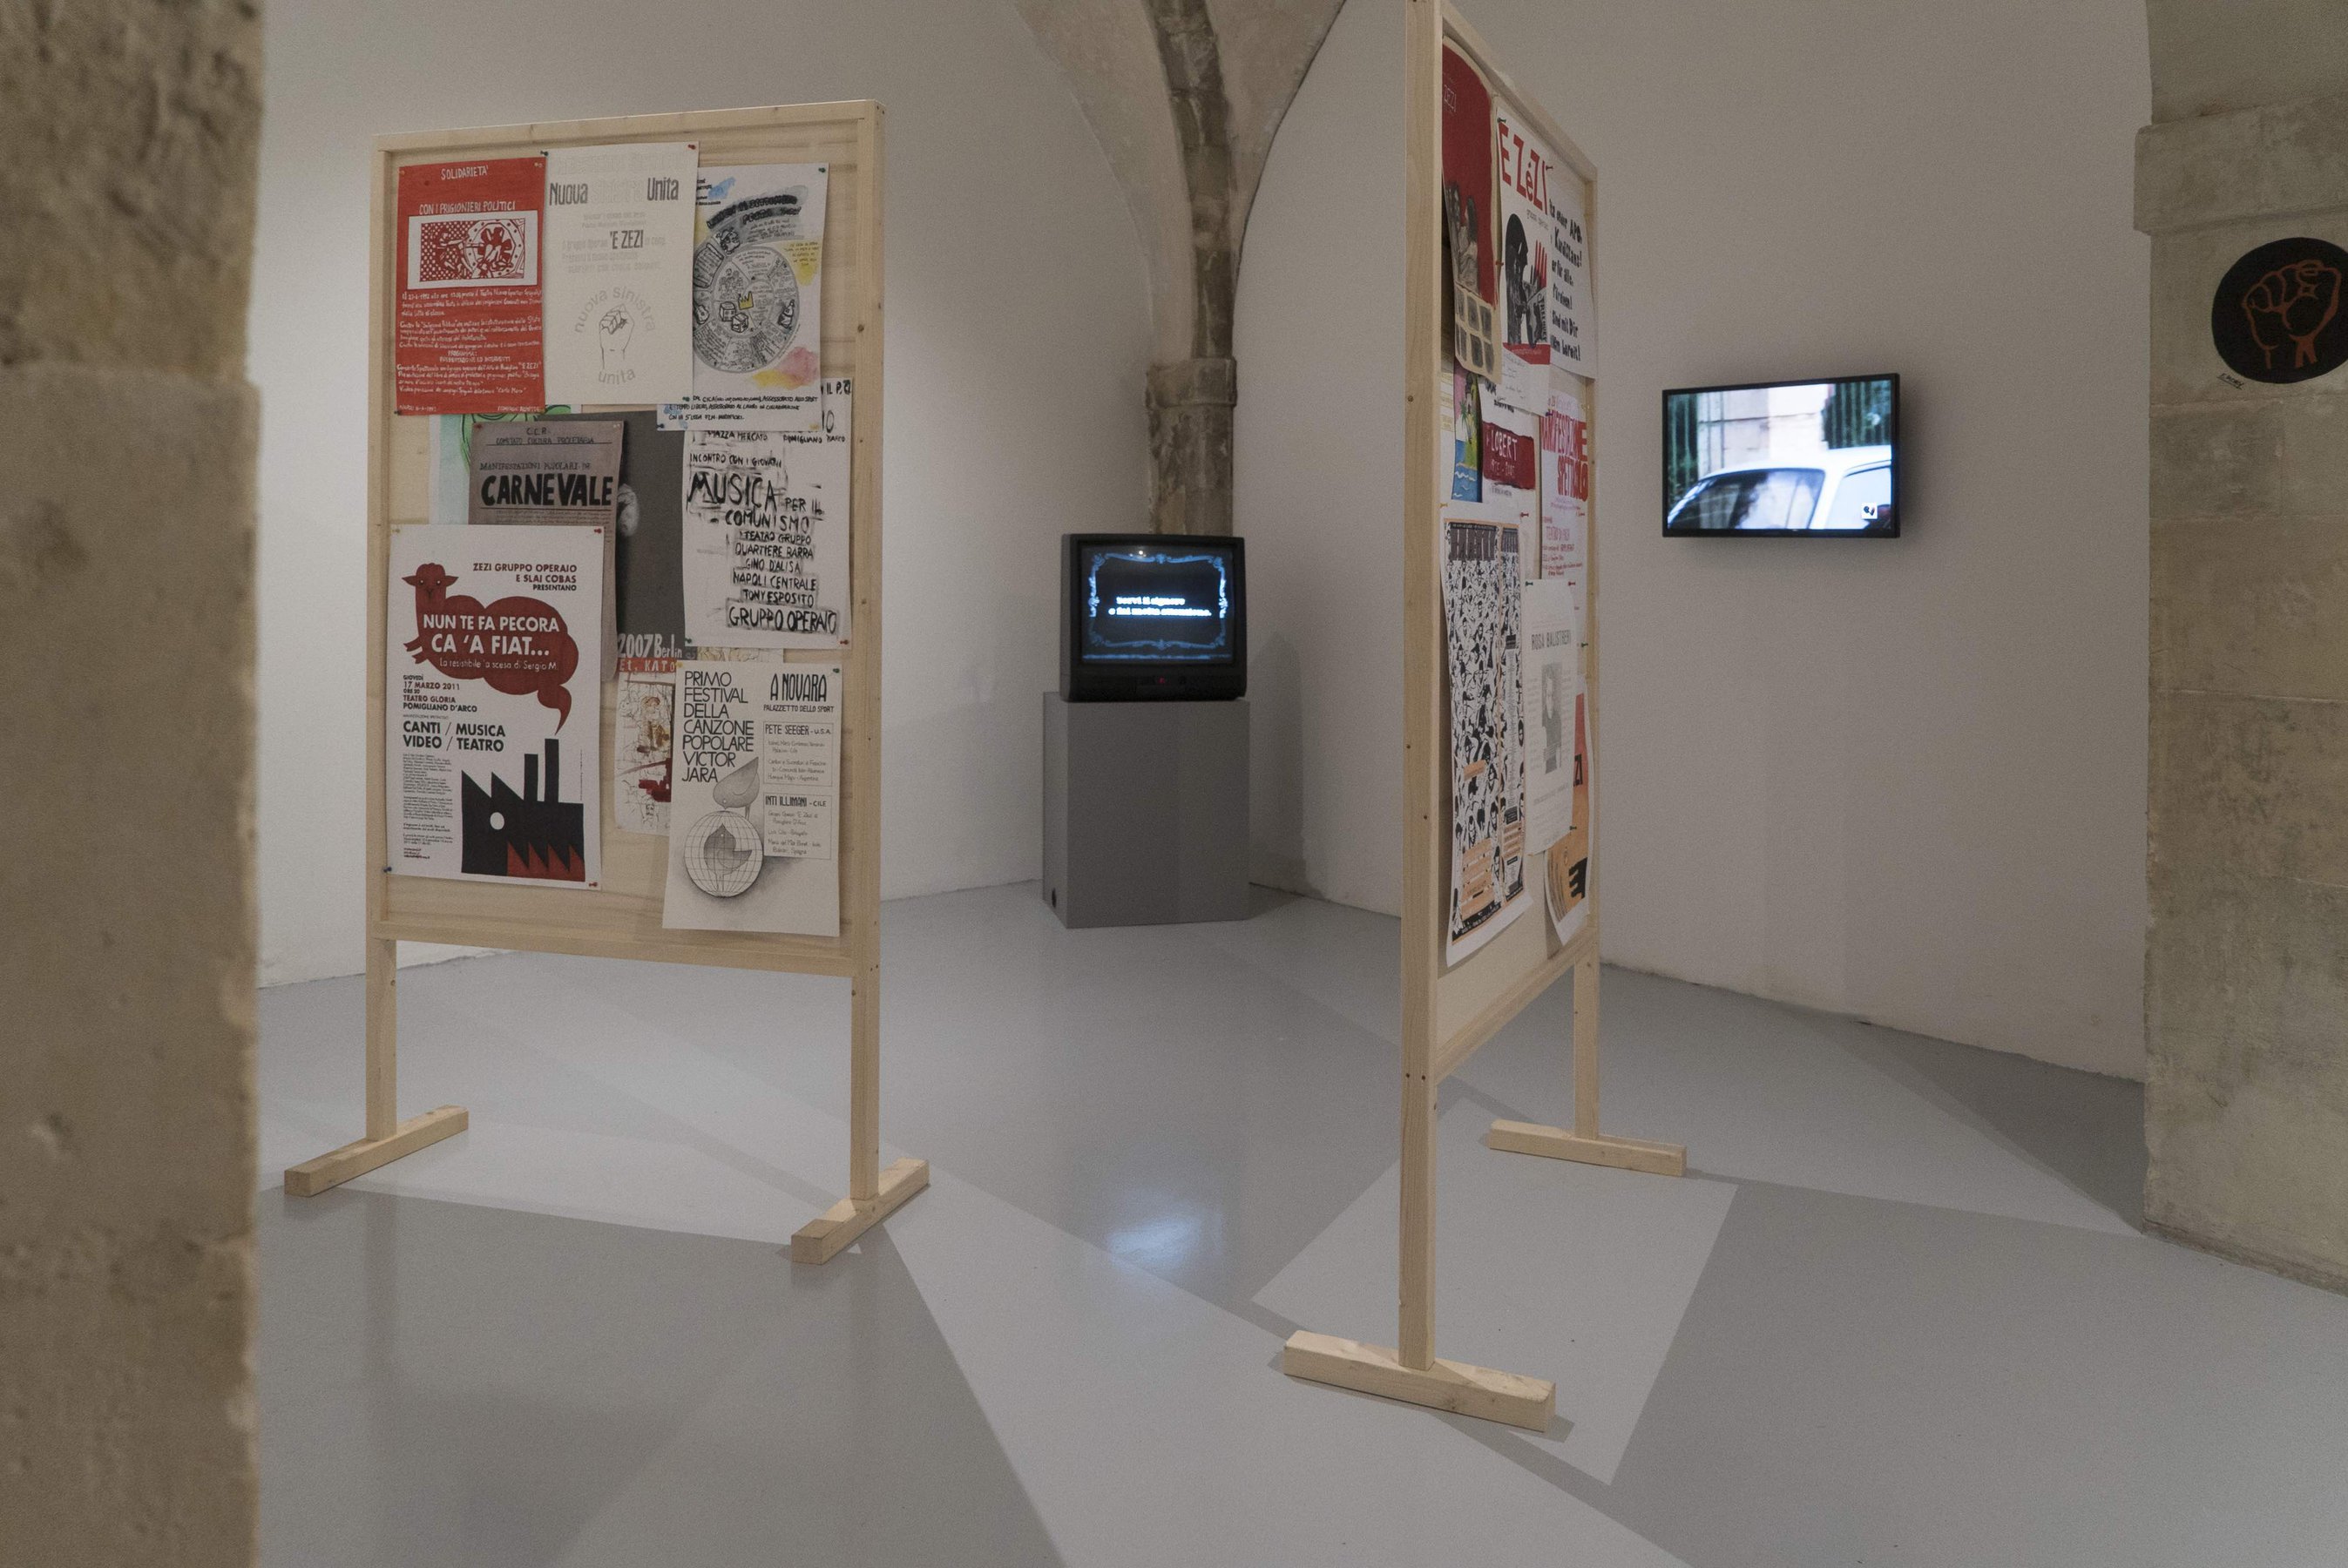 ZIG ZAG ZEG ZUG 2018, installation view at Laveronica arte contemporanea